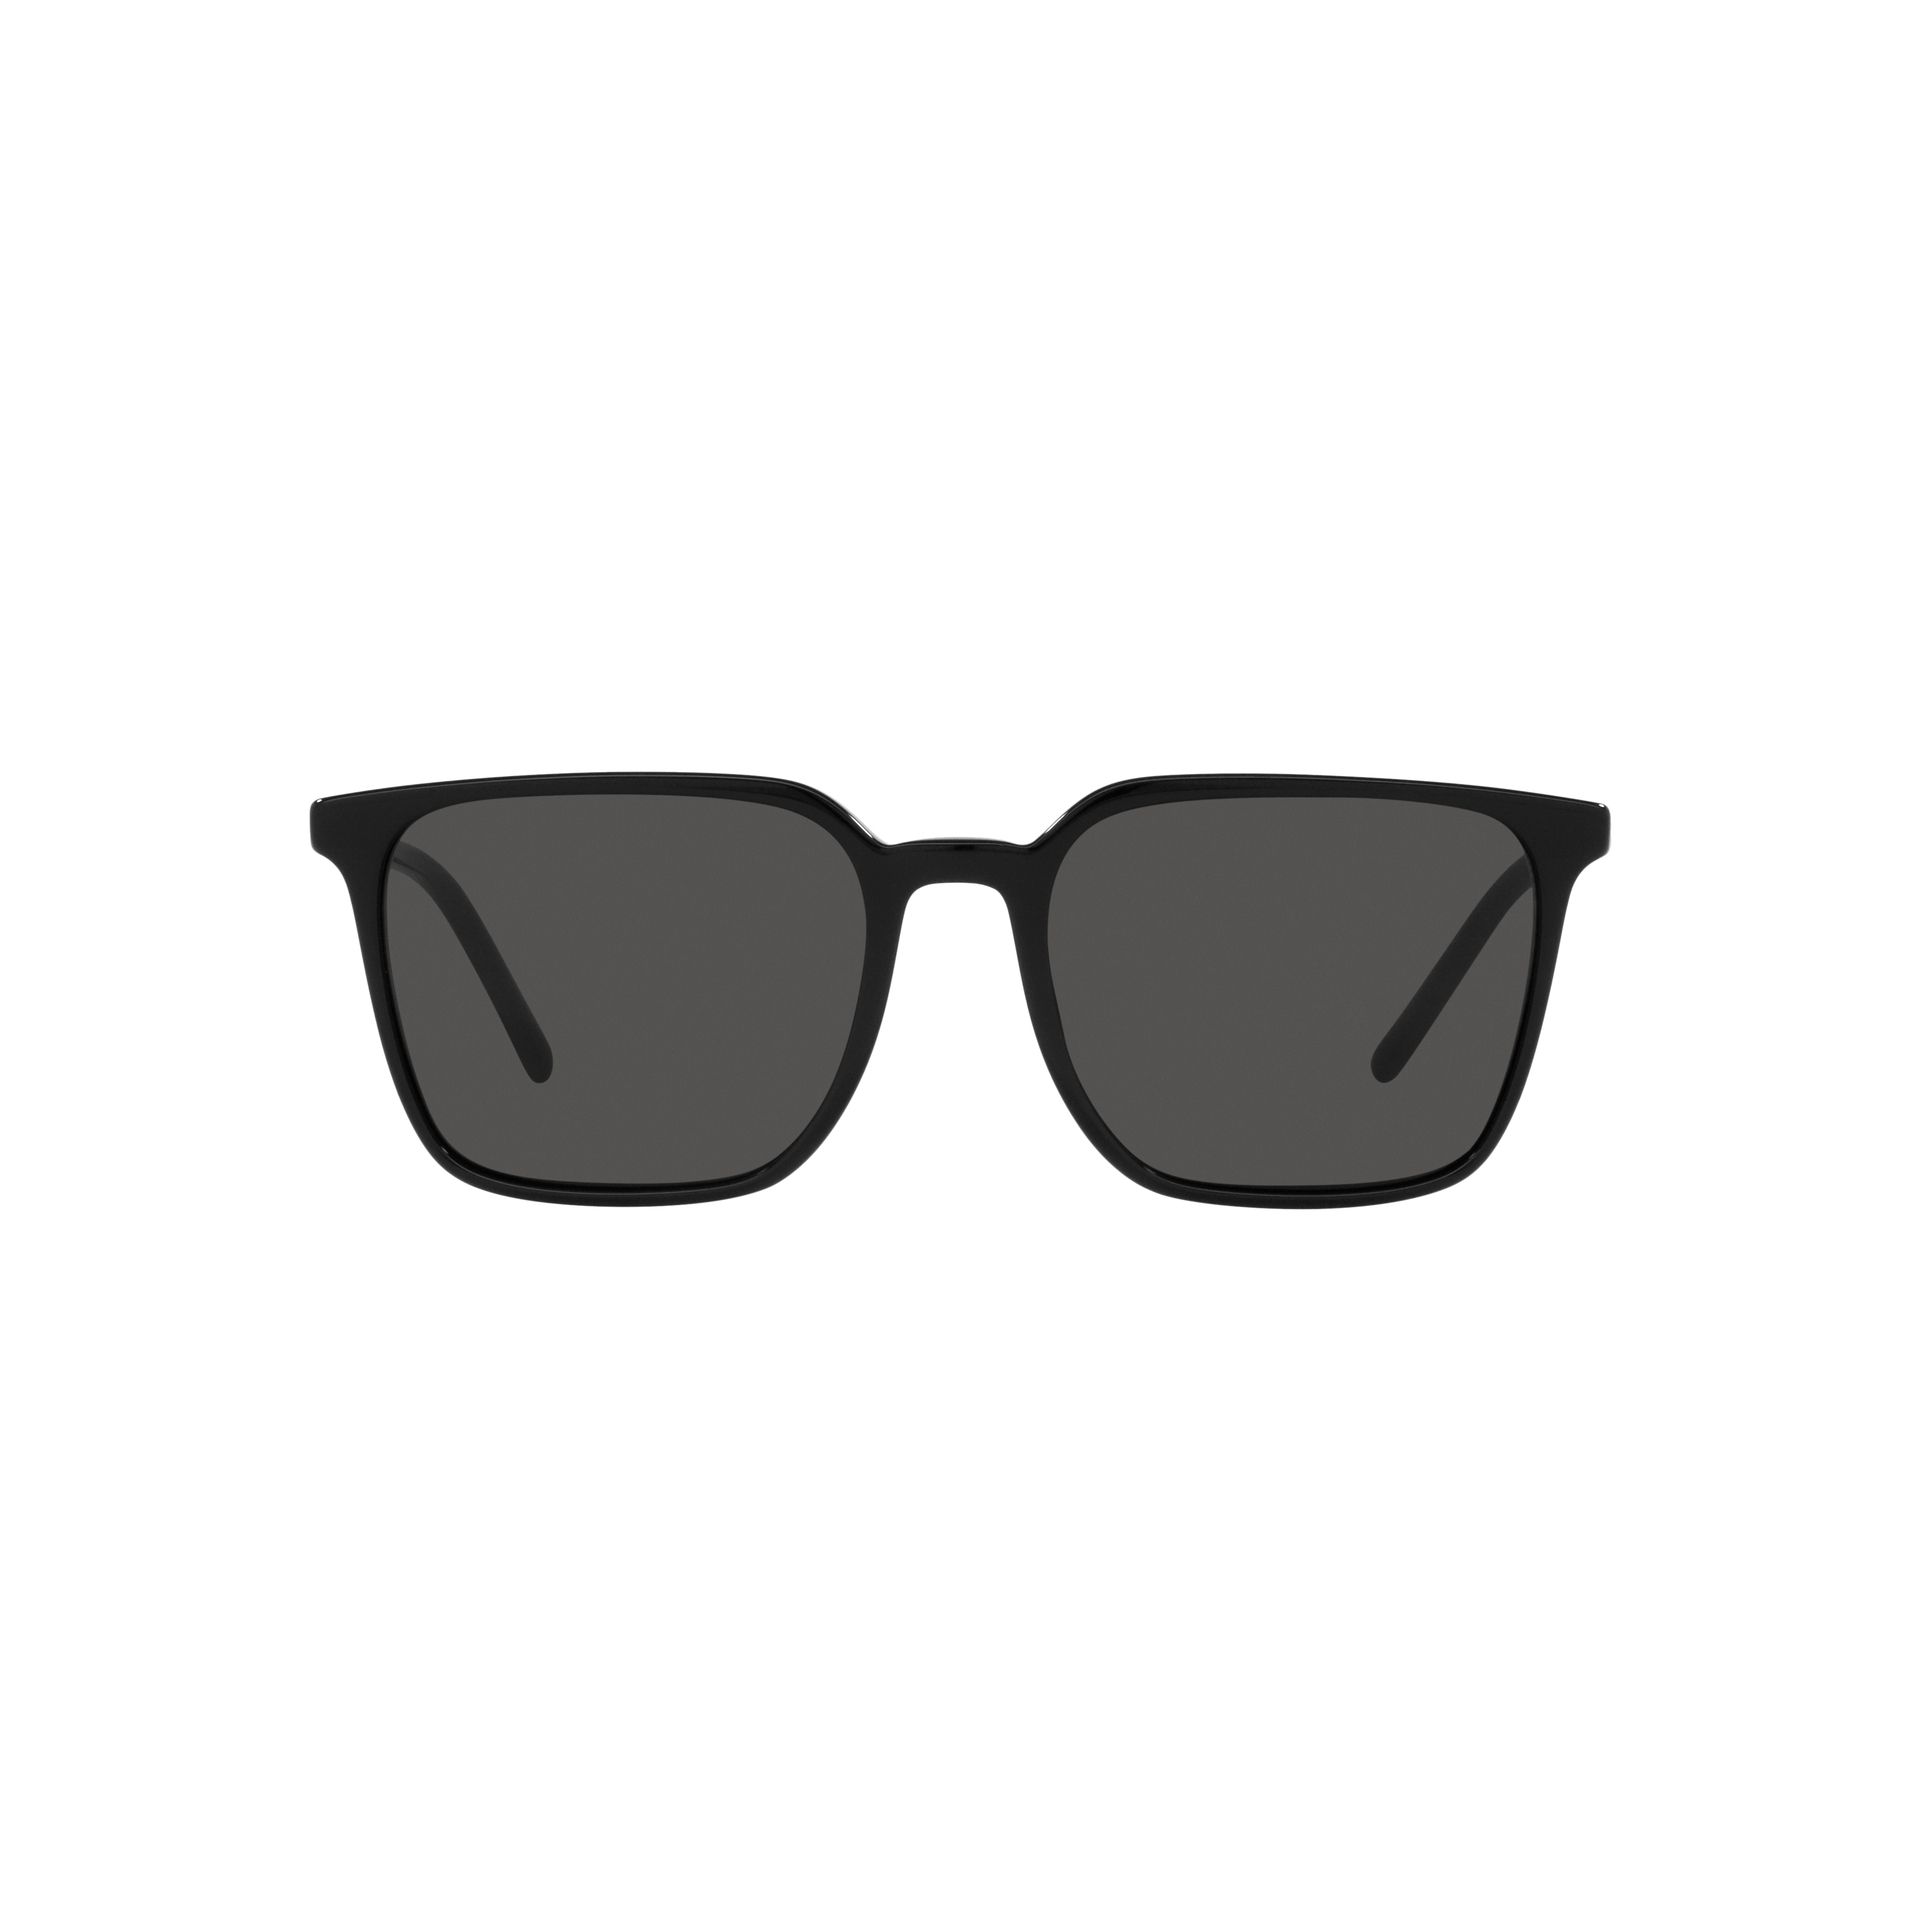 0DG4424 Square Sunglasses 501 87 - size 56